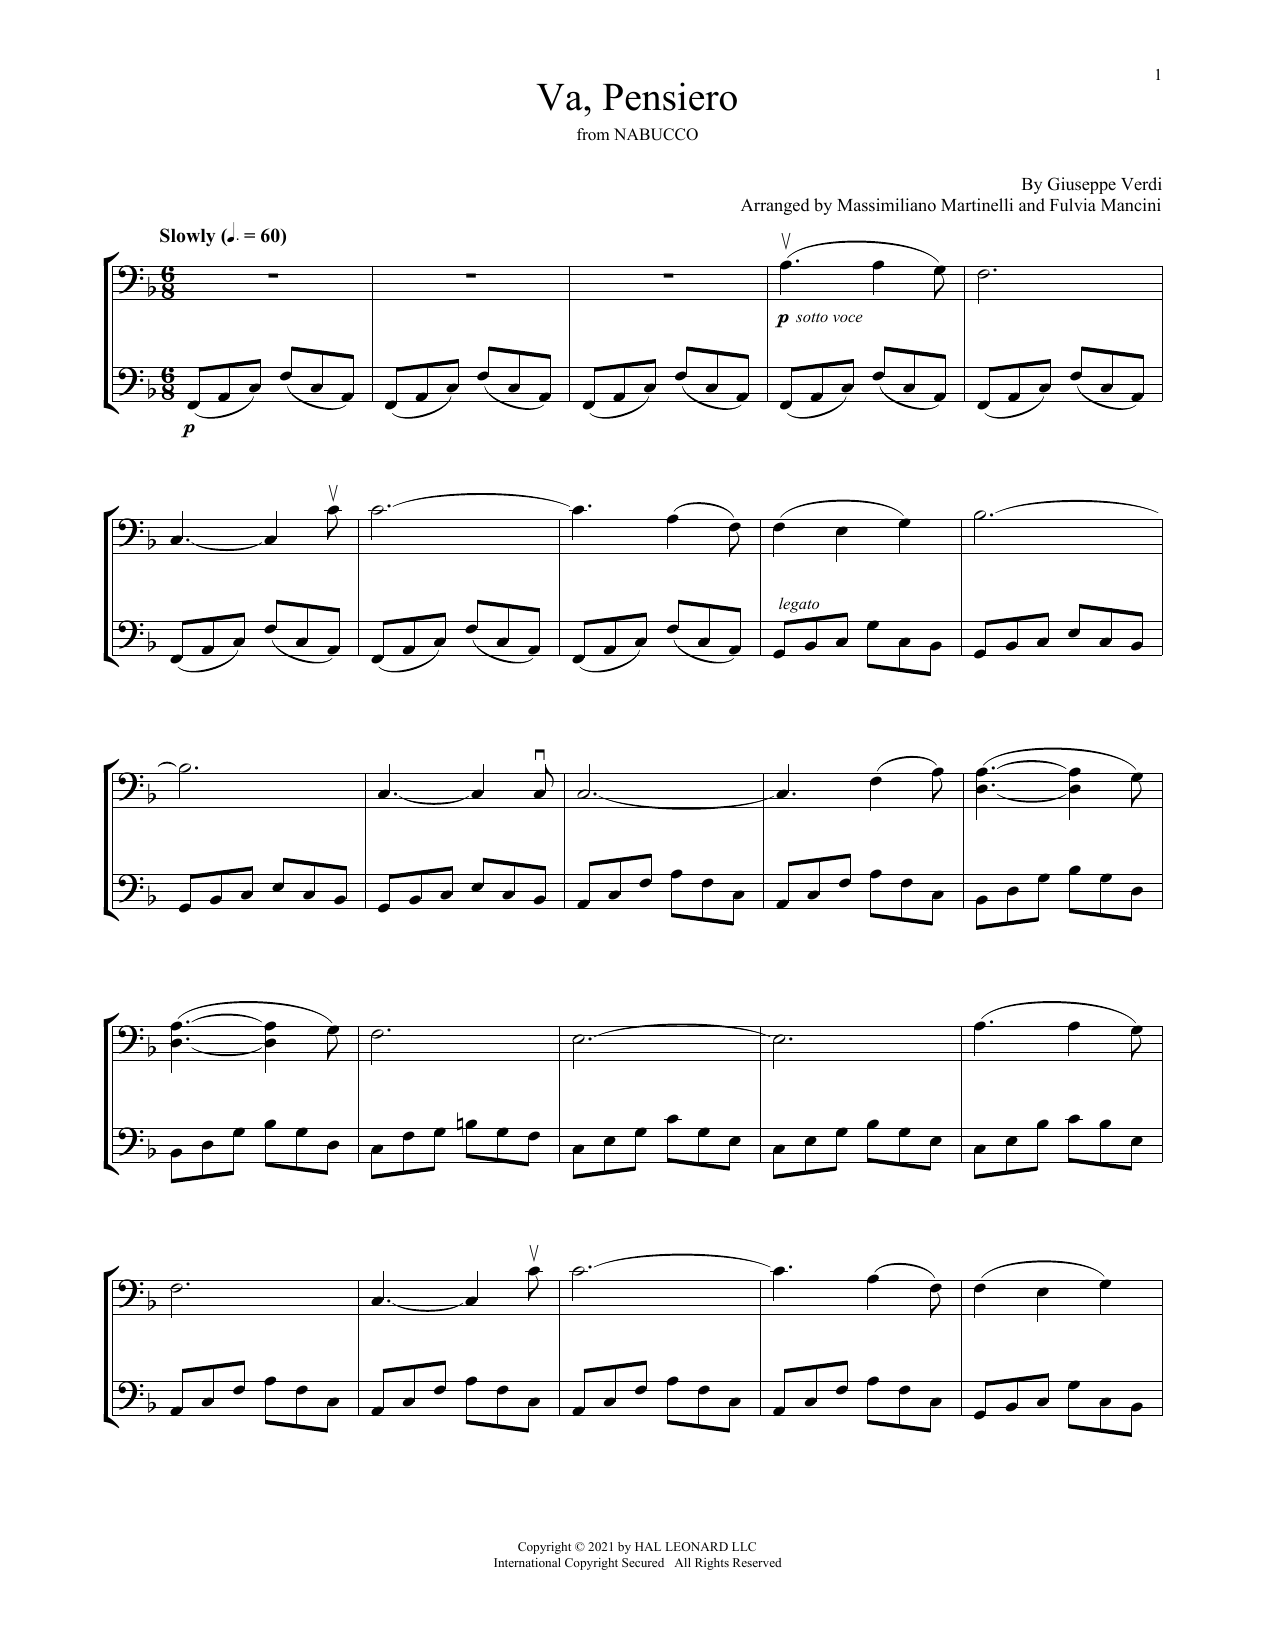 Download Mr & Mrs Cello Va, Pensiero (from Nabucco) Sheet Music